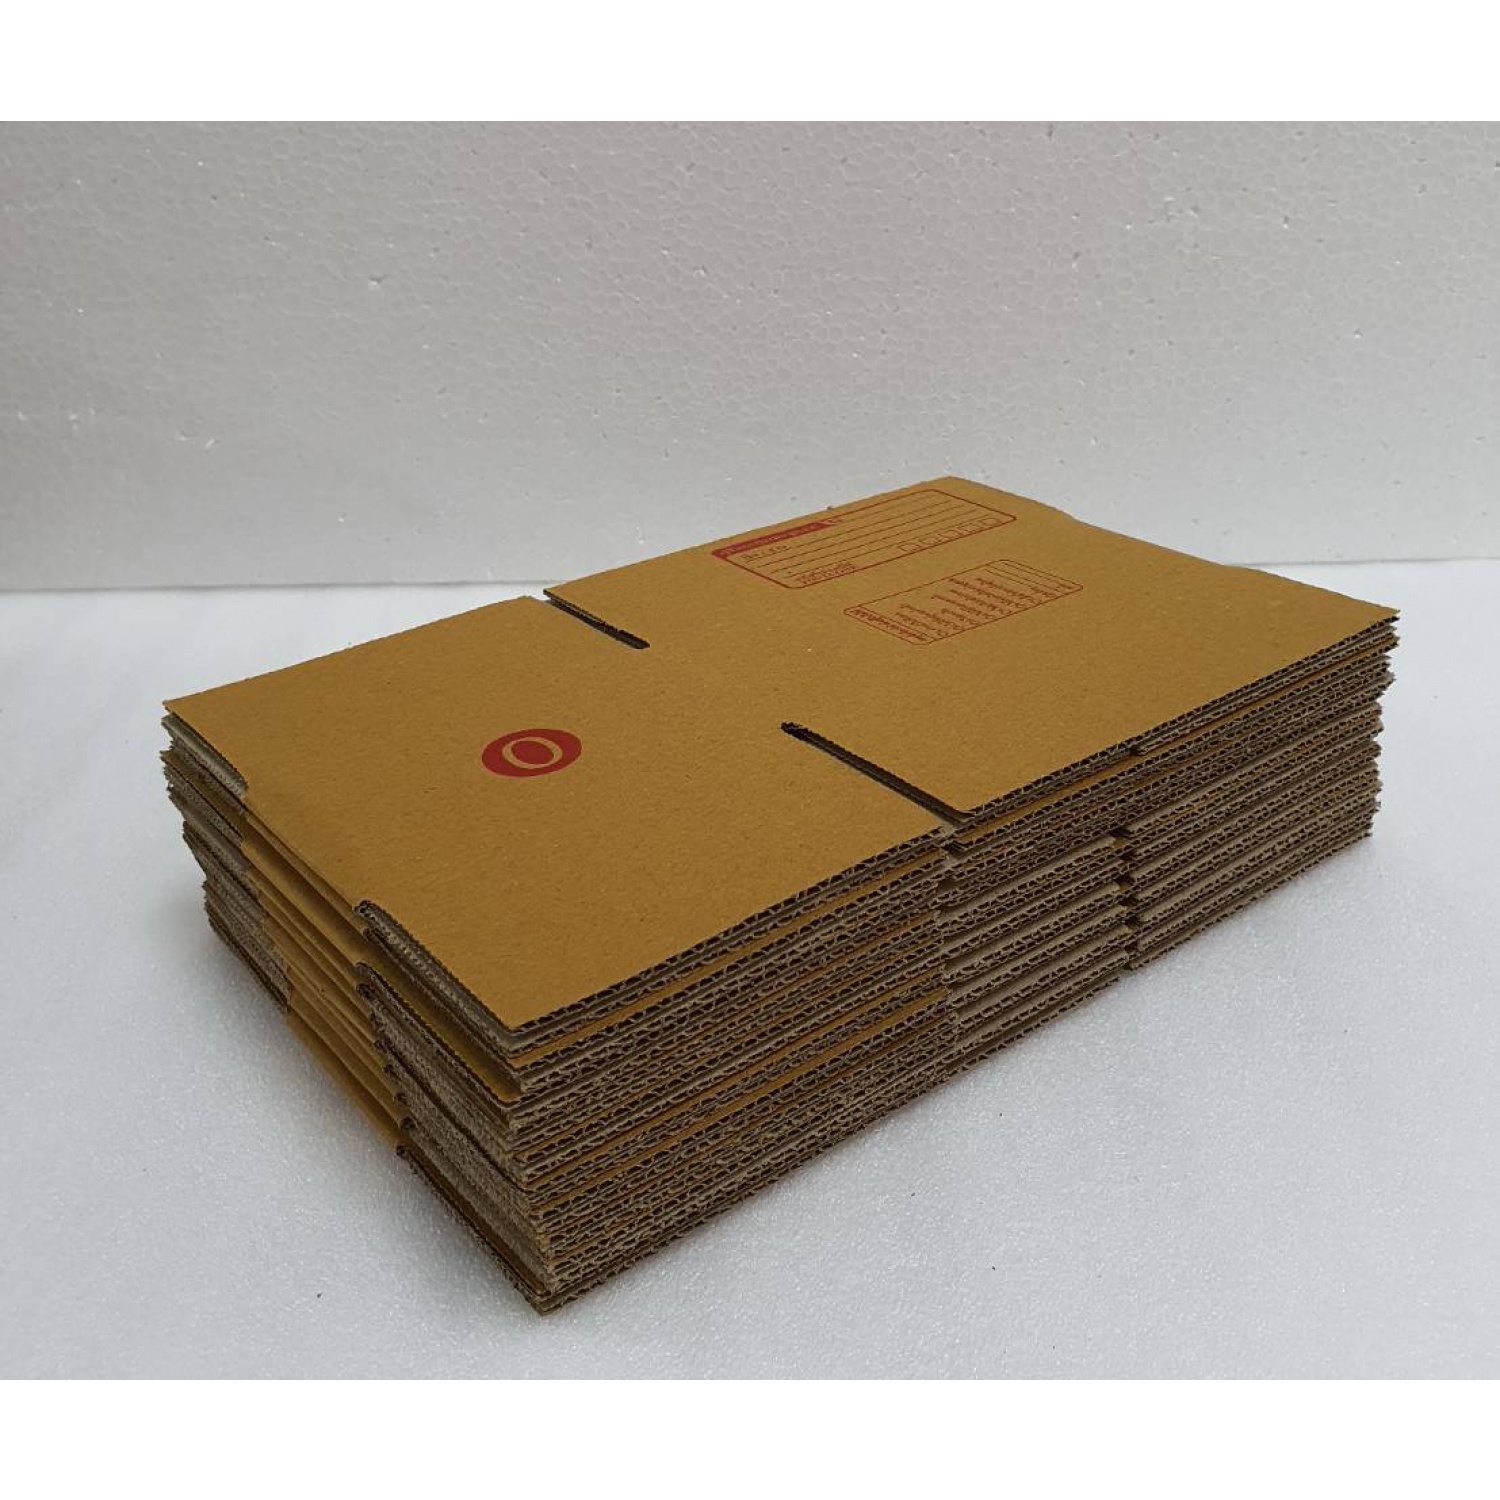 i-box OTP กล่องไปรษณีย์ #O ขนาด 11x17x6ซม. รุ่น 3PB0-10 สีน้ำตาล (10 ใบ/แพ็ค)